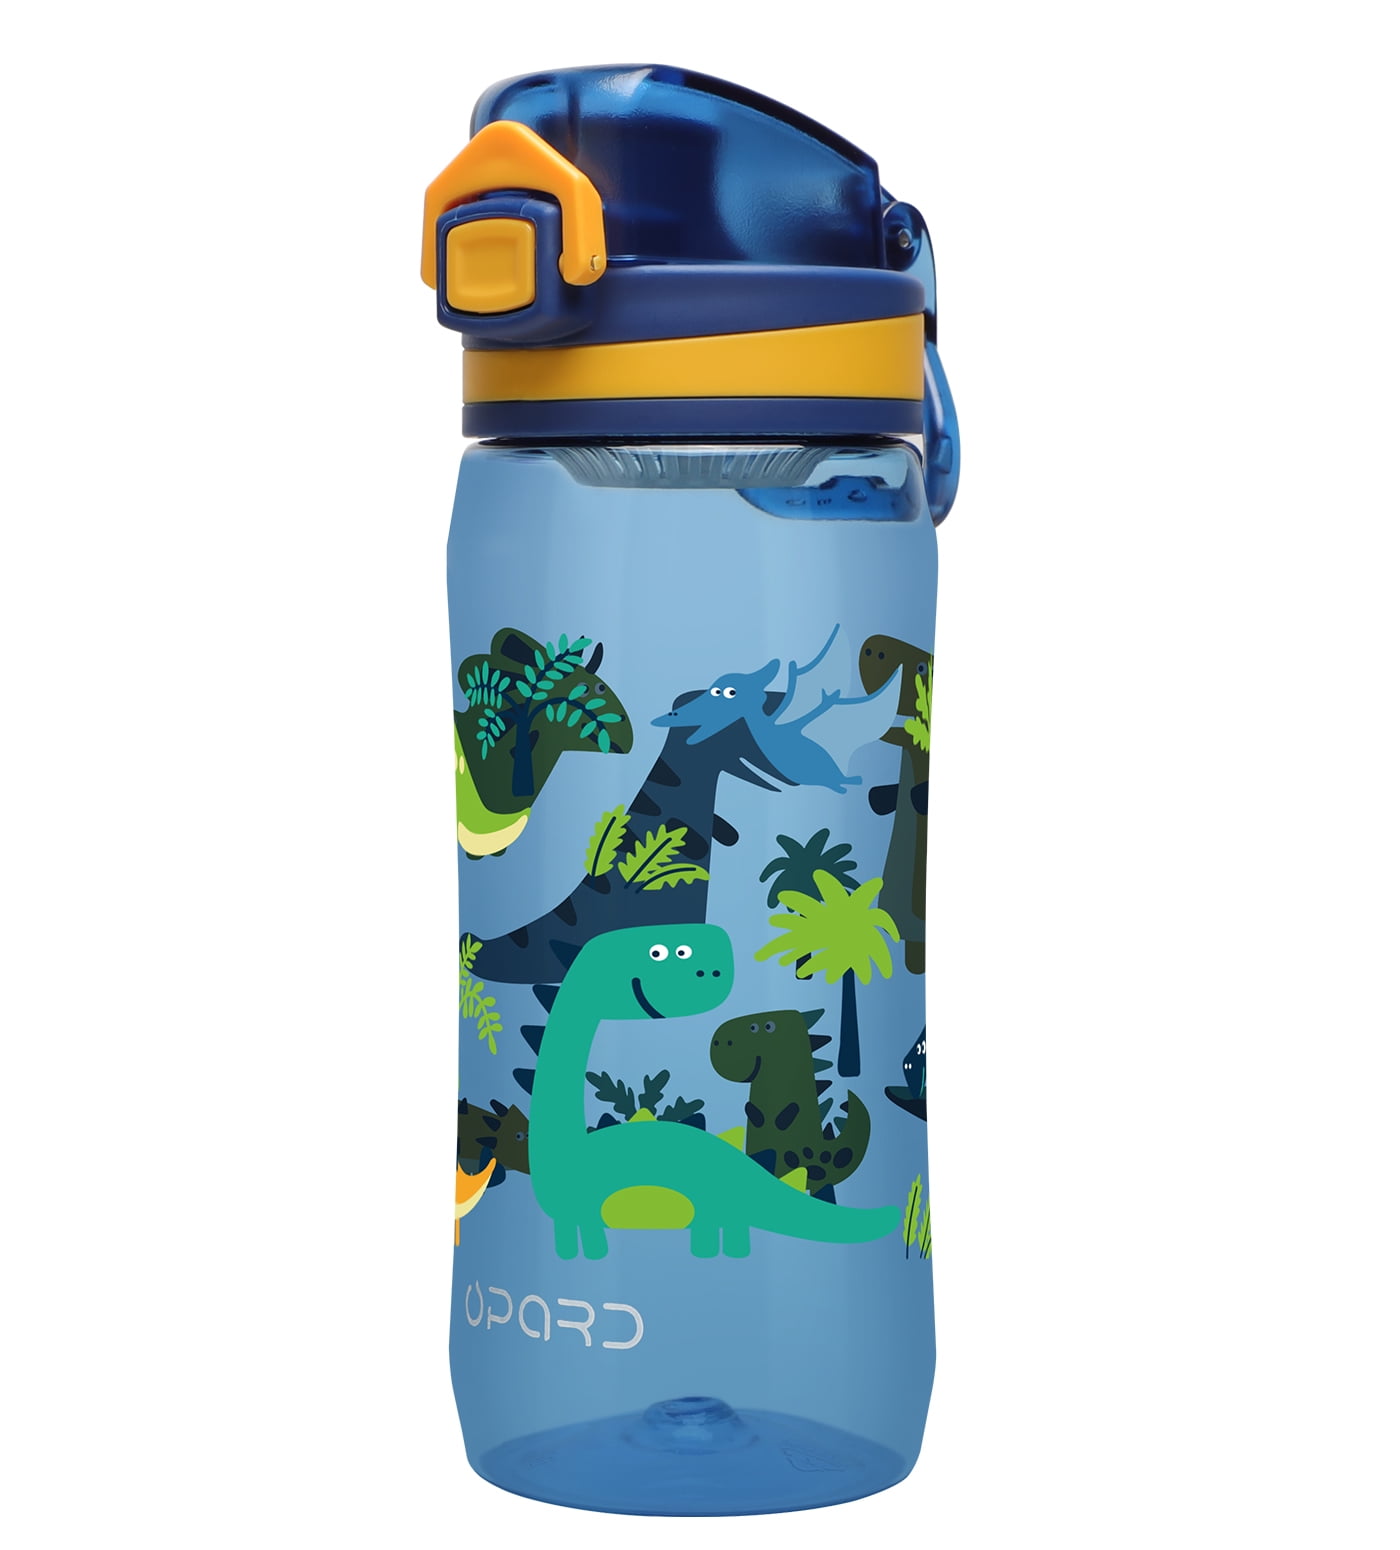 OLDLEY Kids Water Bottle for School, 17 oz (Straw Lid) BPA-Free Reusable Leak-Proof Durable Tritan Plastic Water Bottles with One-Handed Opening Straw